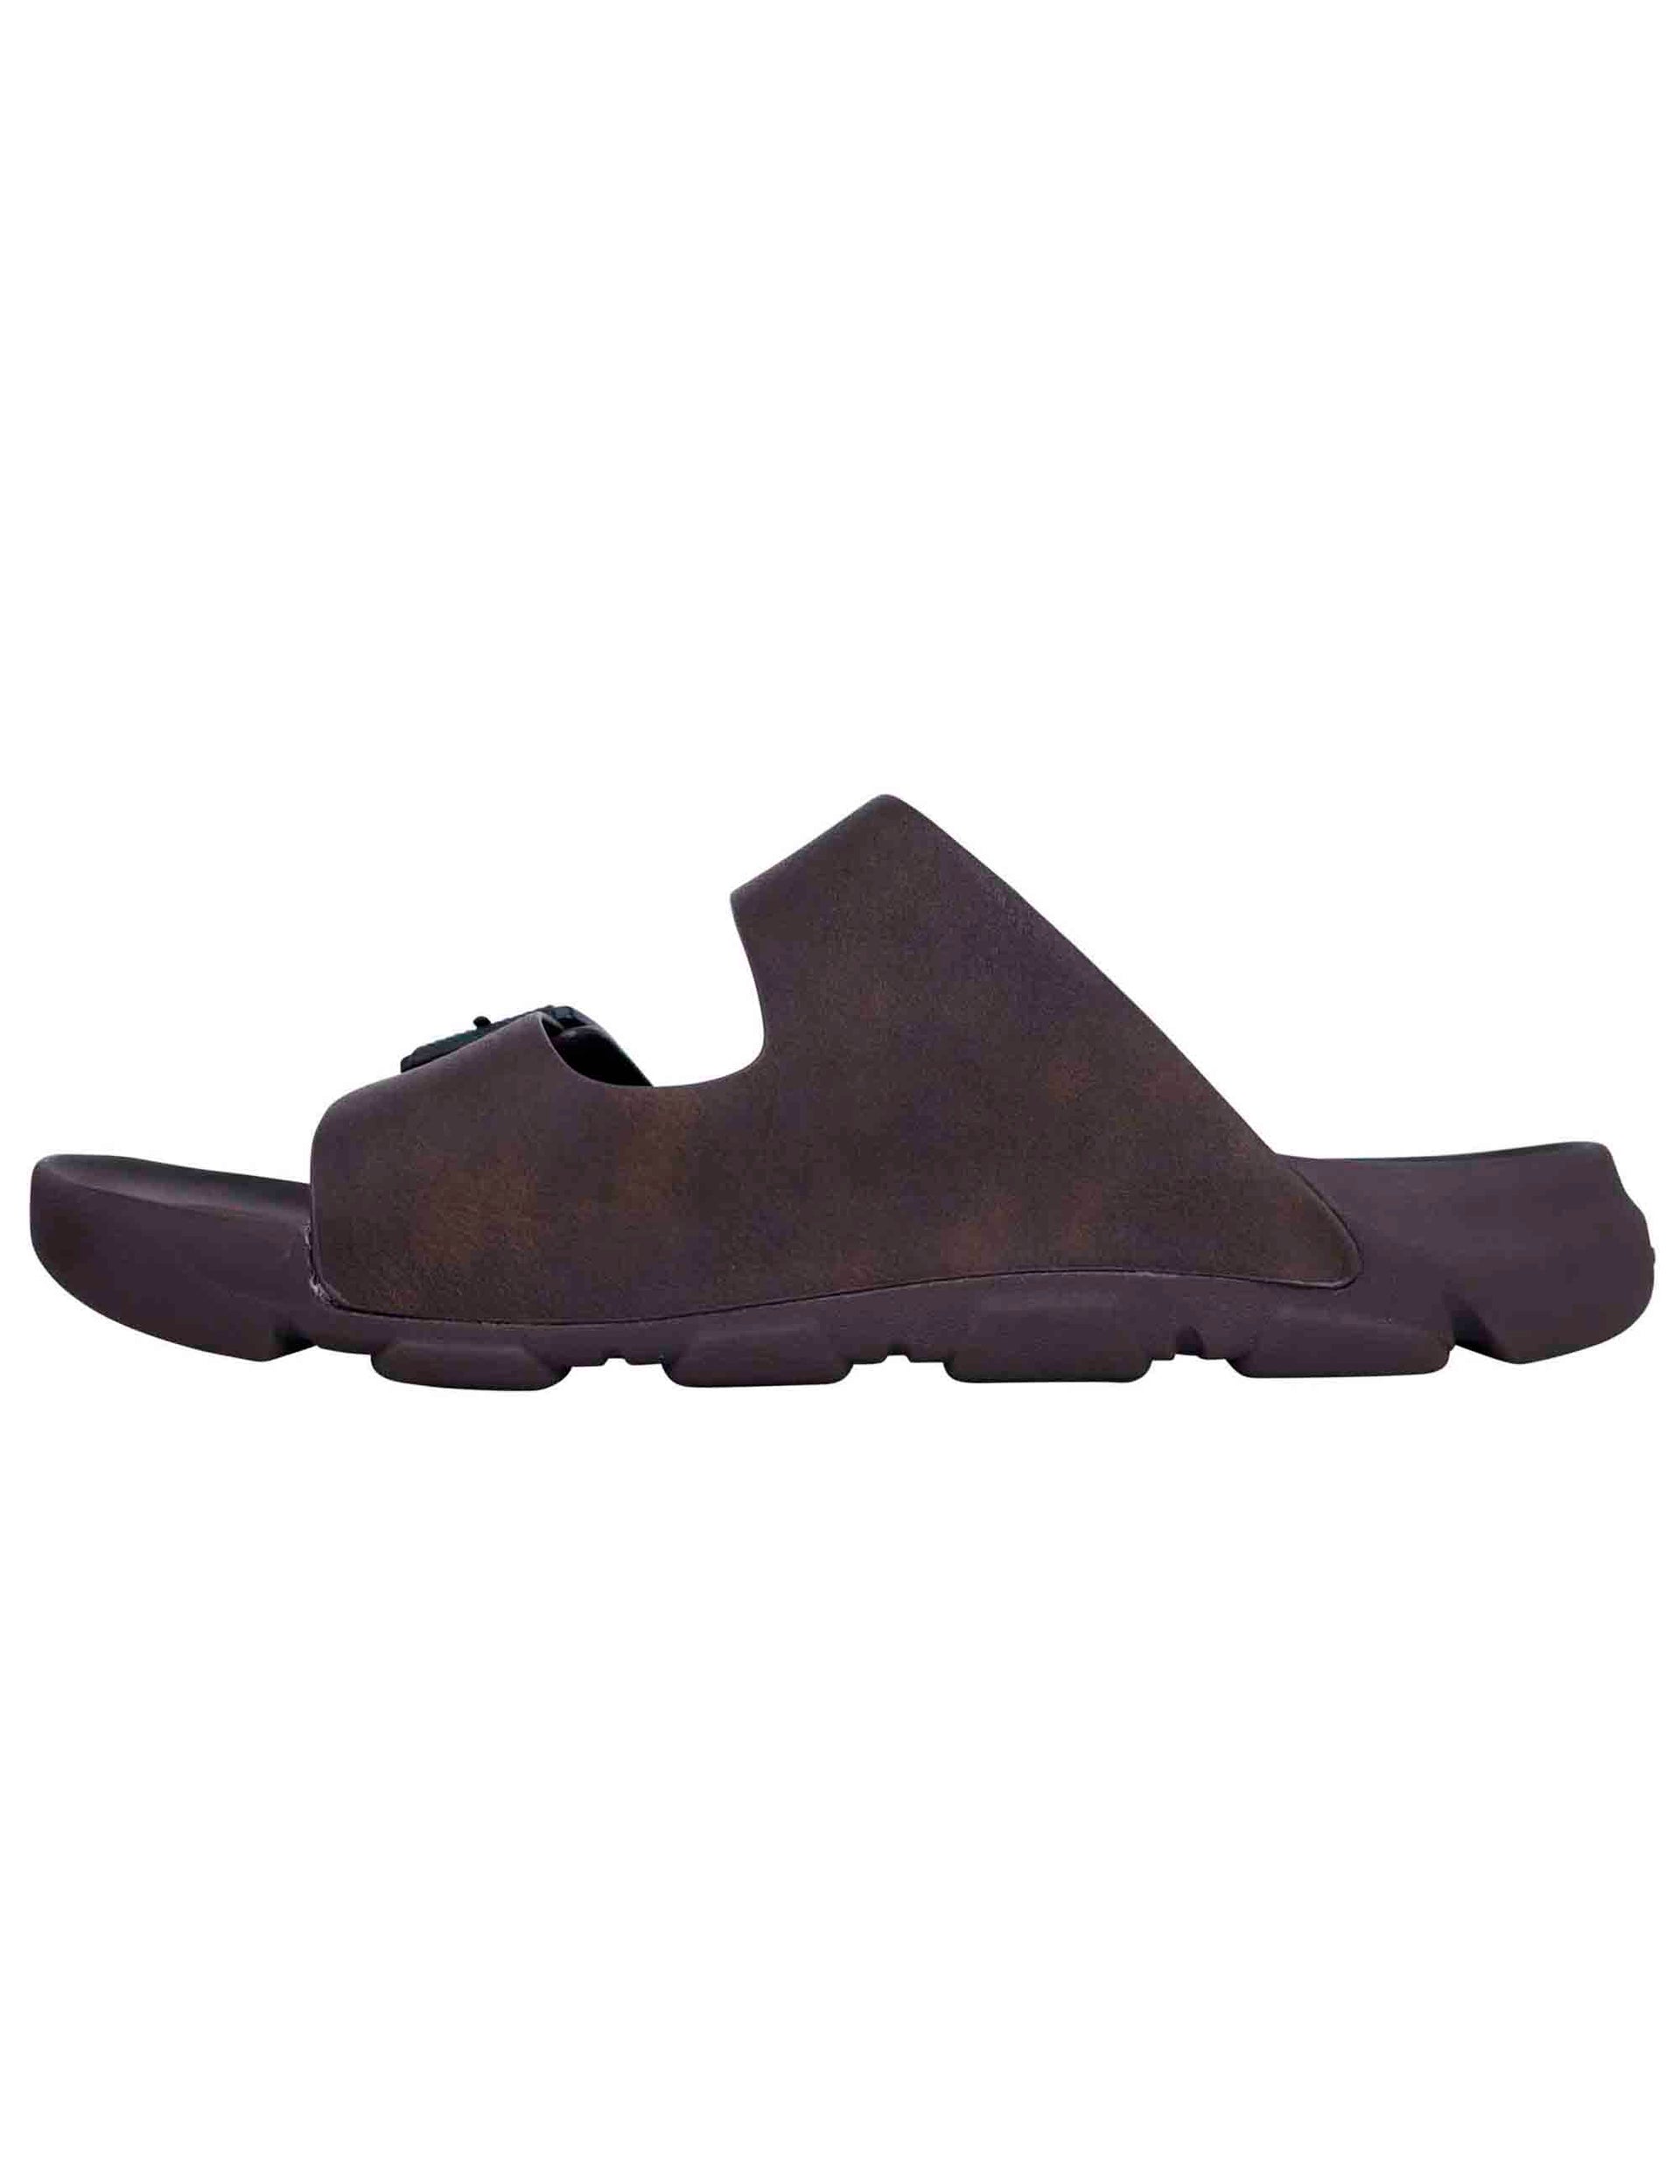 Daytona men's sandals in dark brown leather